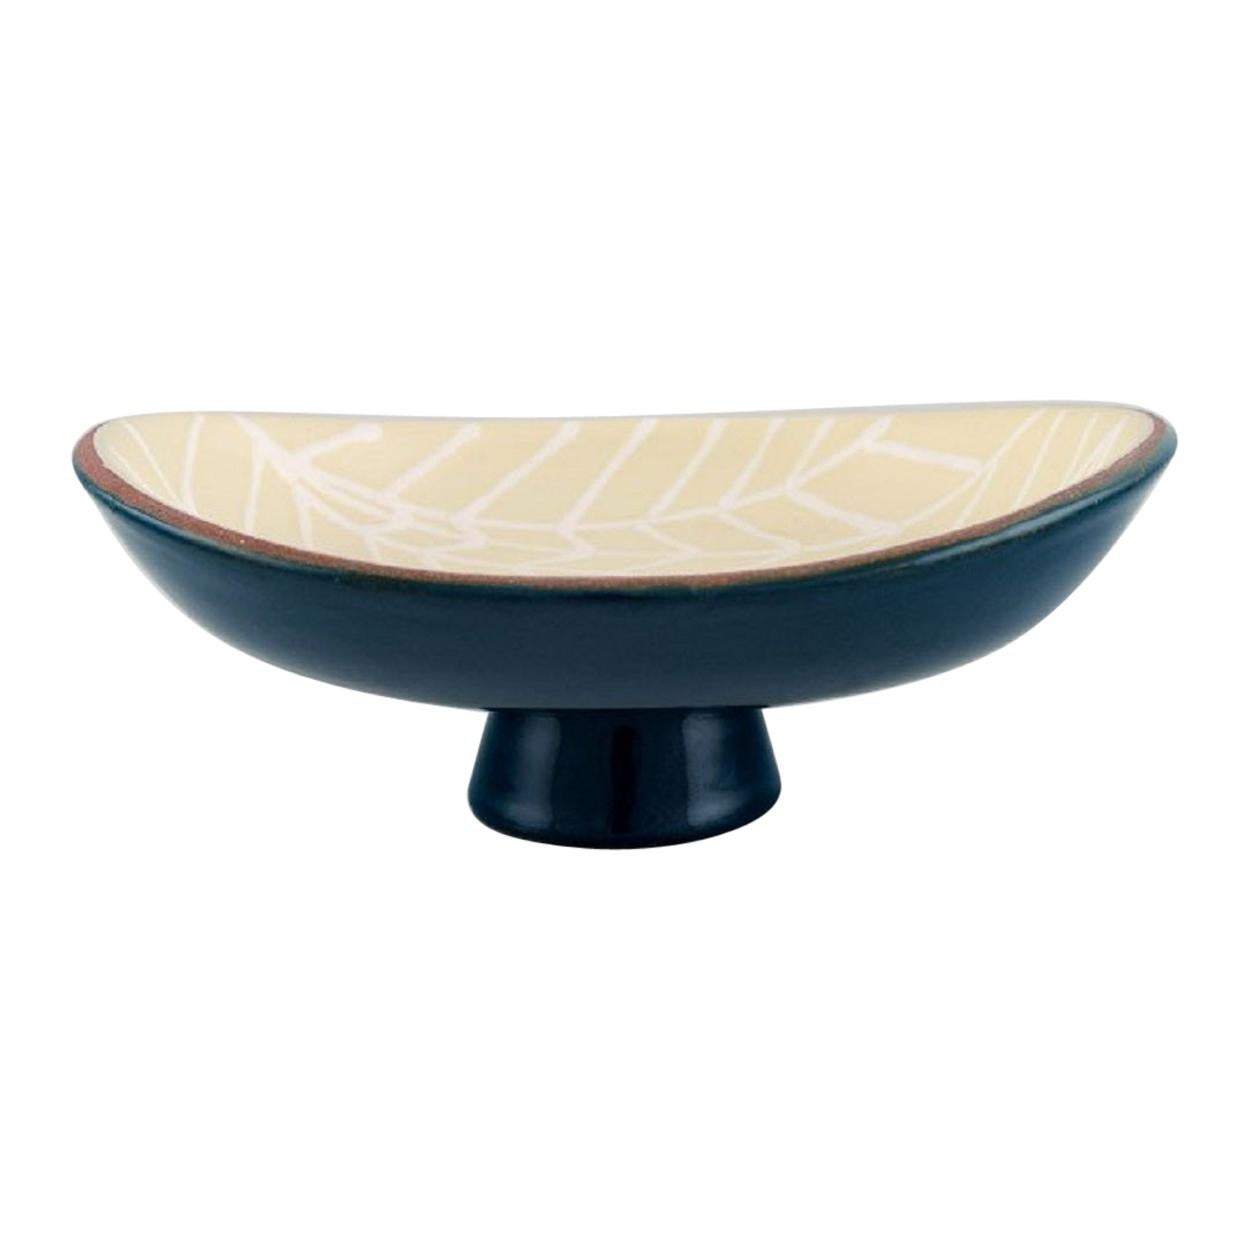 Mari Simmulson for Upsala-Ekeby, Bowl on Foot in Glazed Stoneware